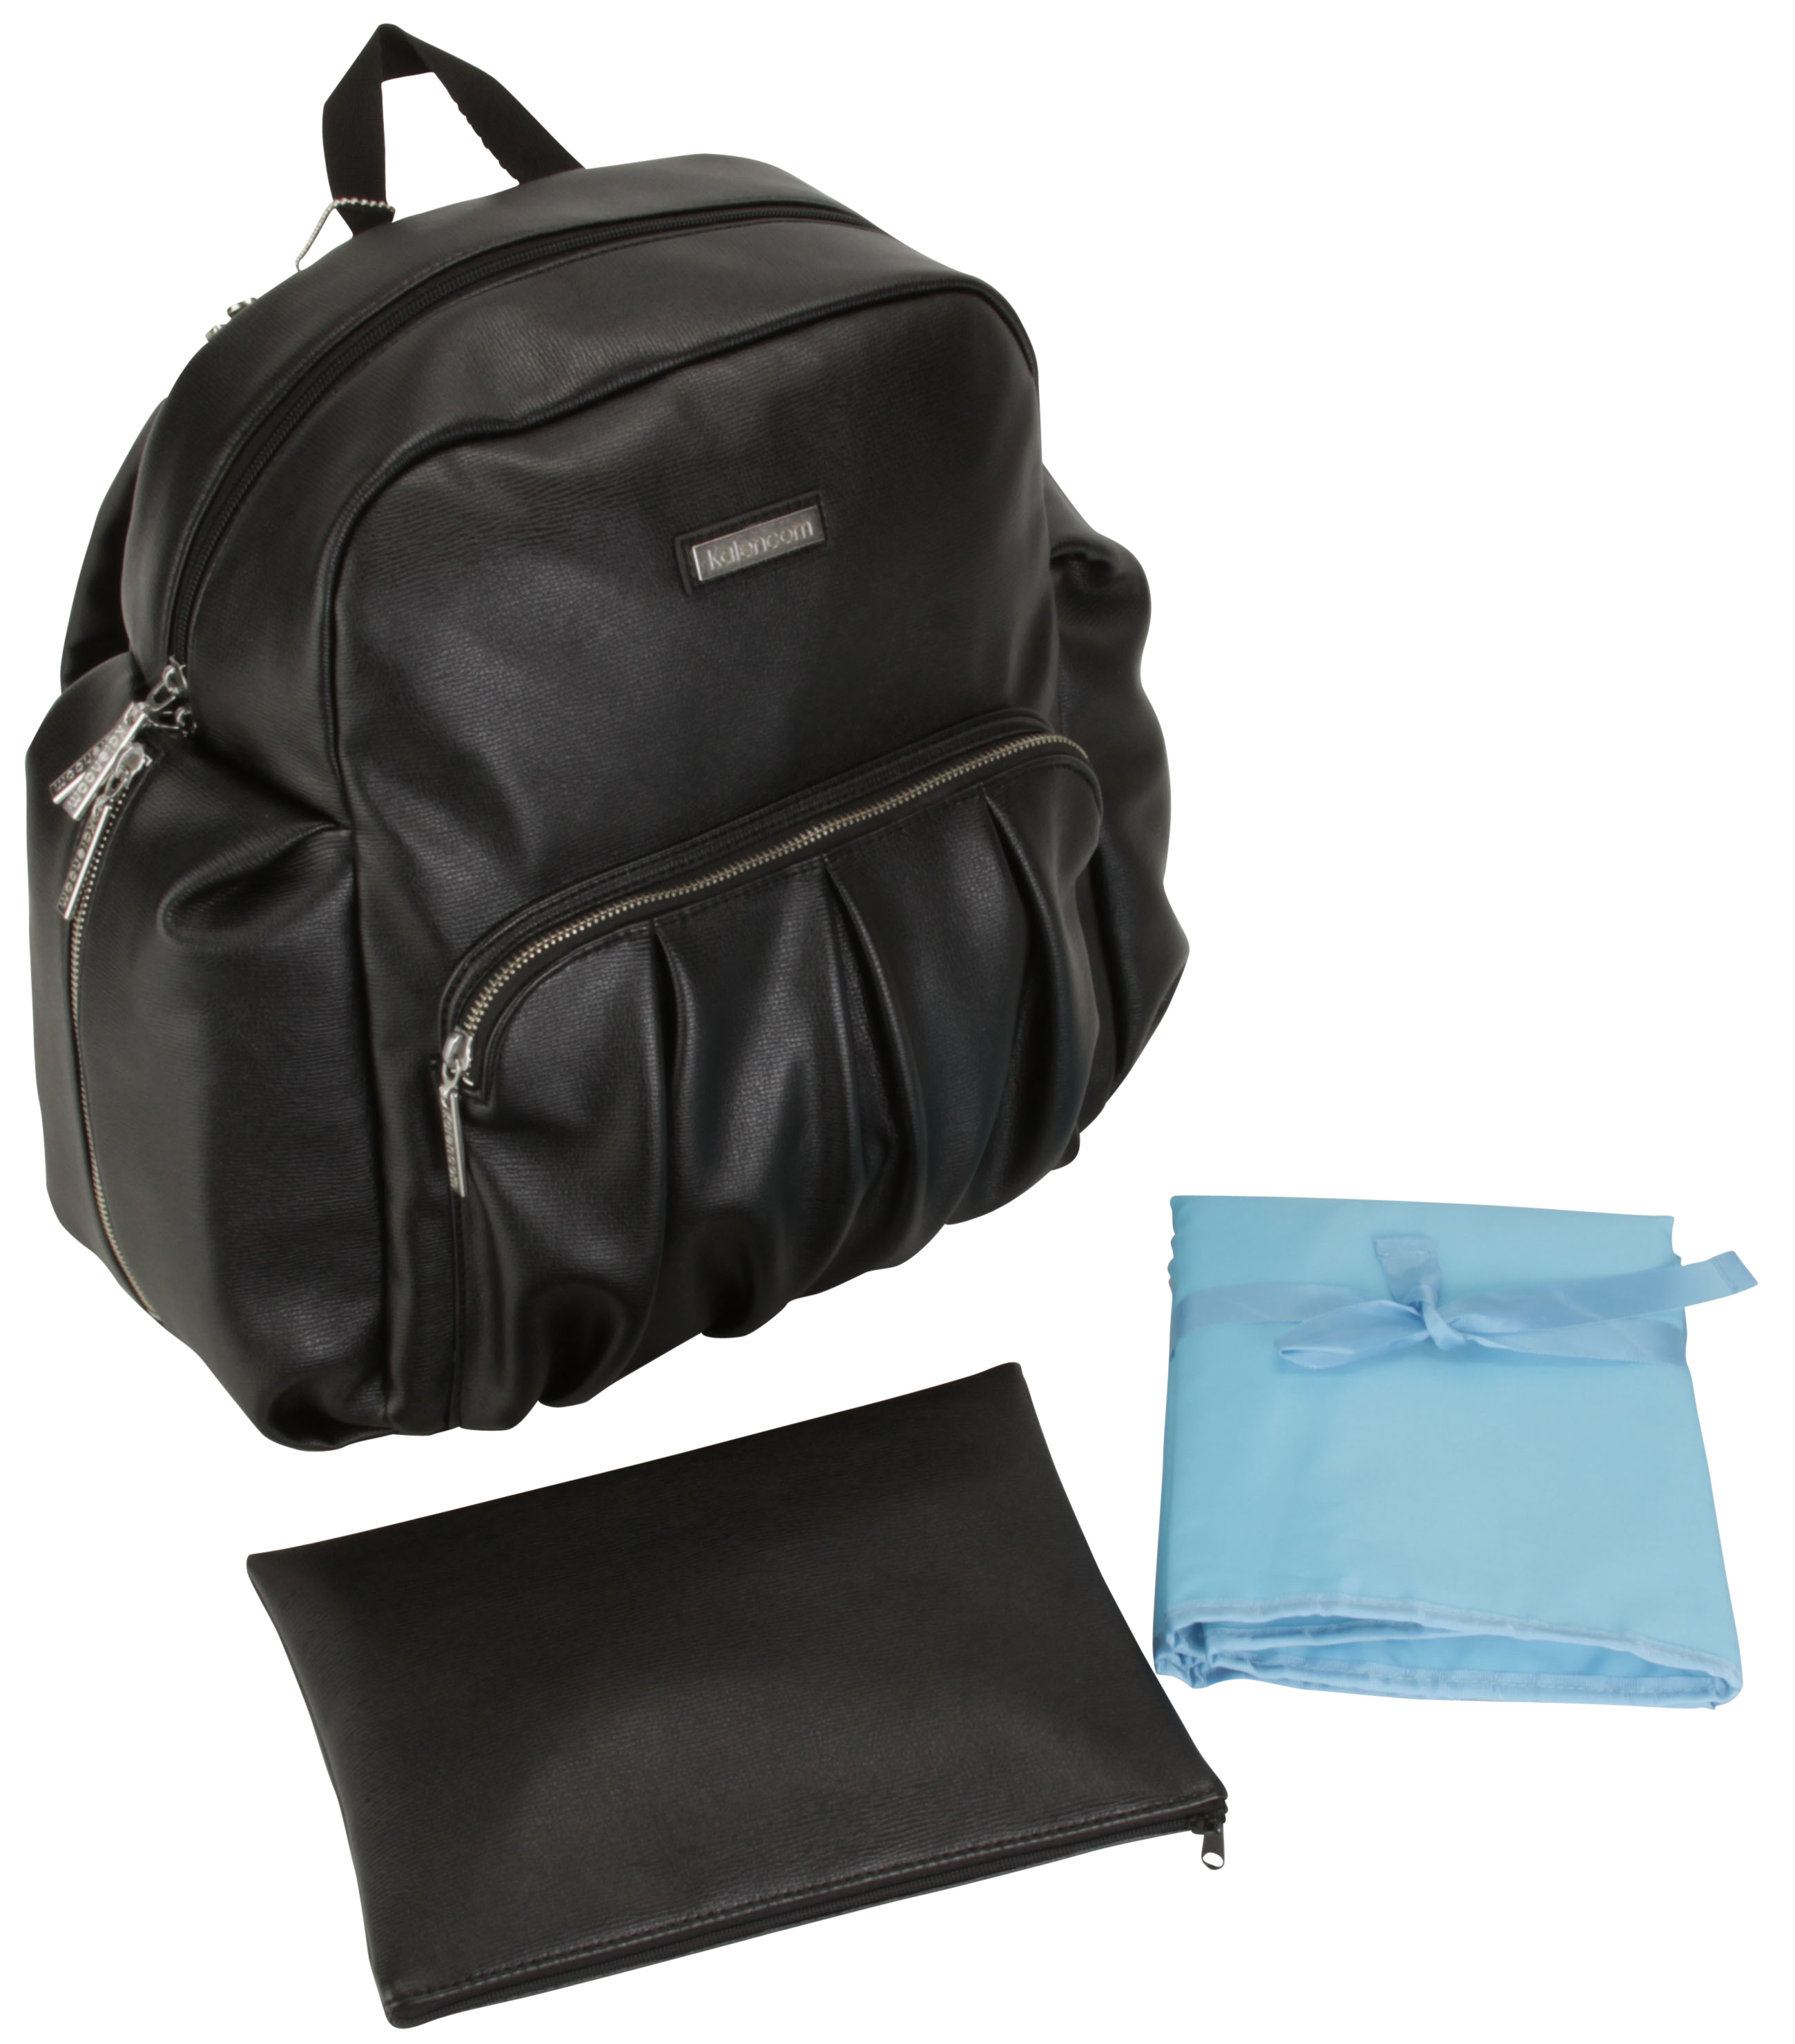 Kalencom Chicago Backpack / Urban Sling Diaper Bag in Black Vegan - image 4 of 4